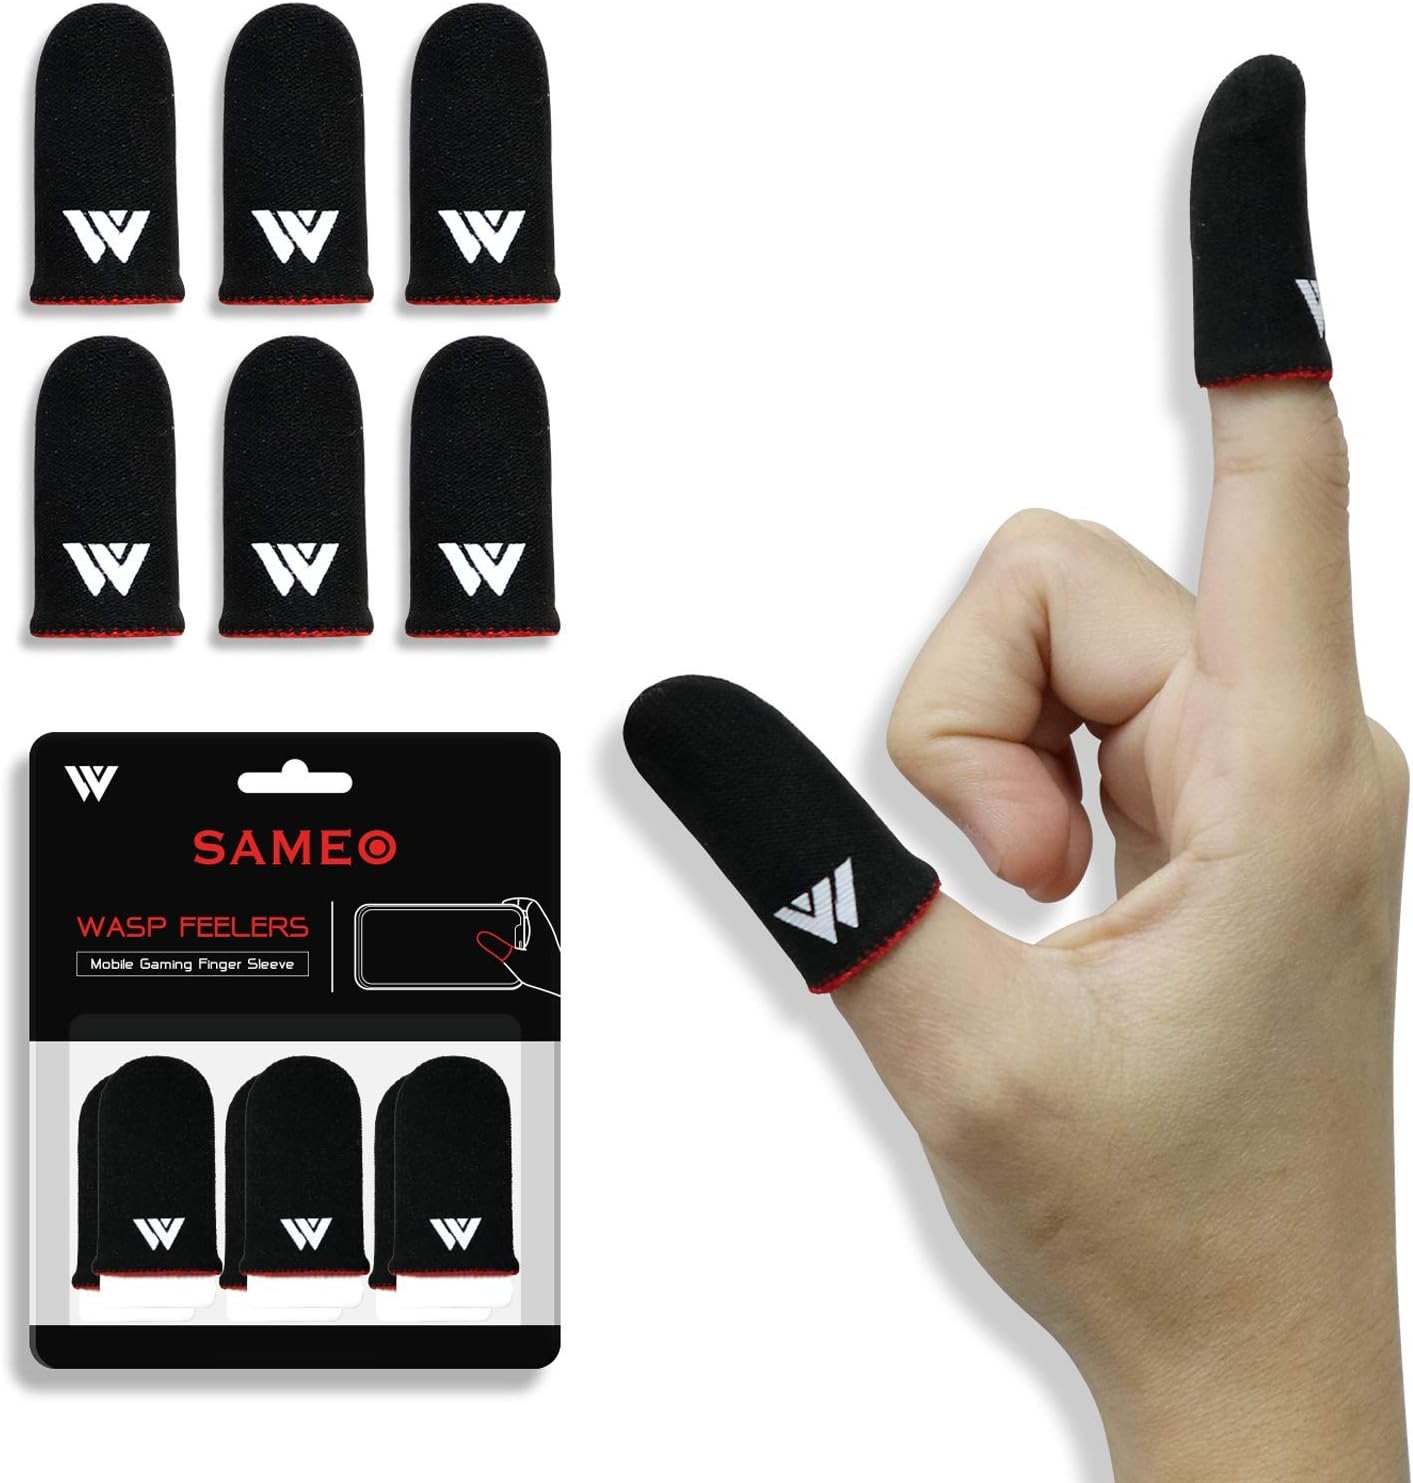 SAMEO Gaming Finger Sleeves for Mobile Game [...]